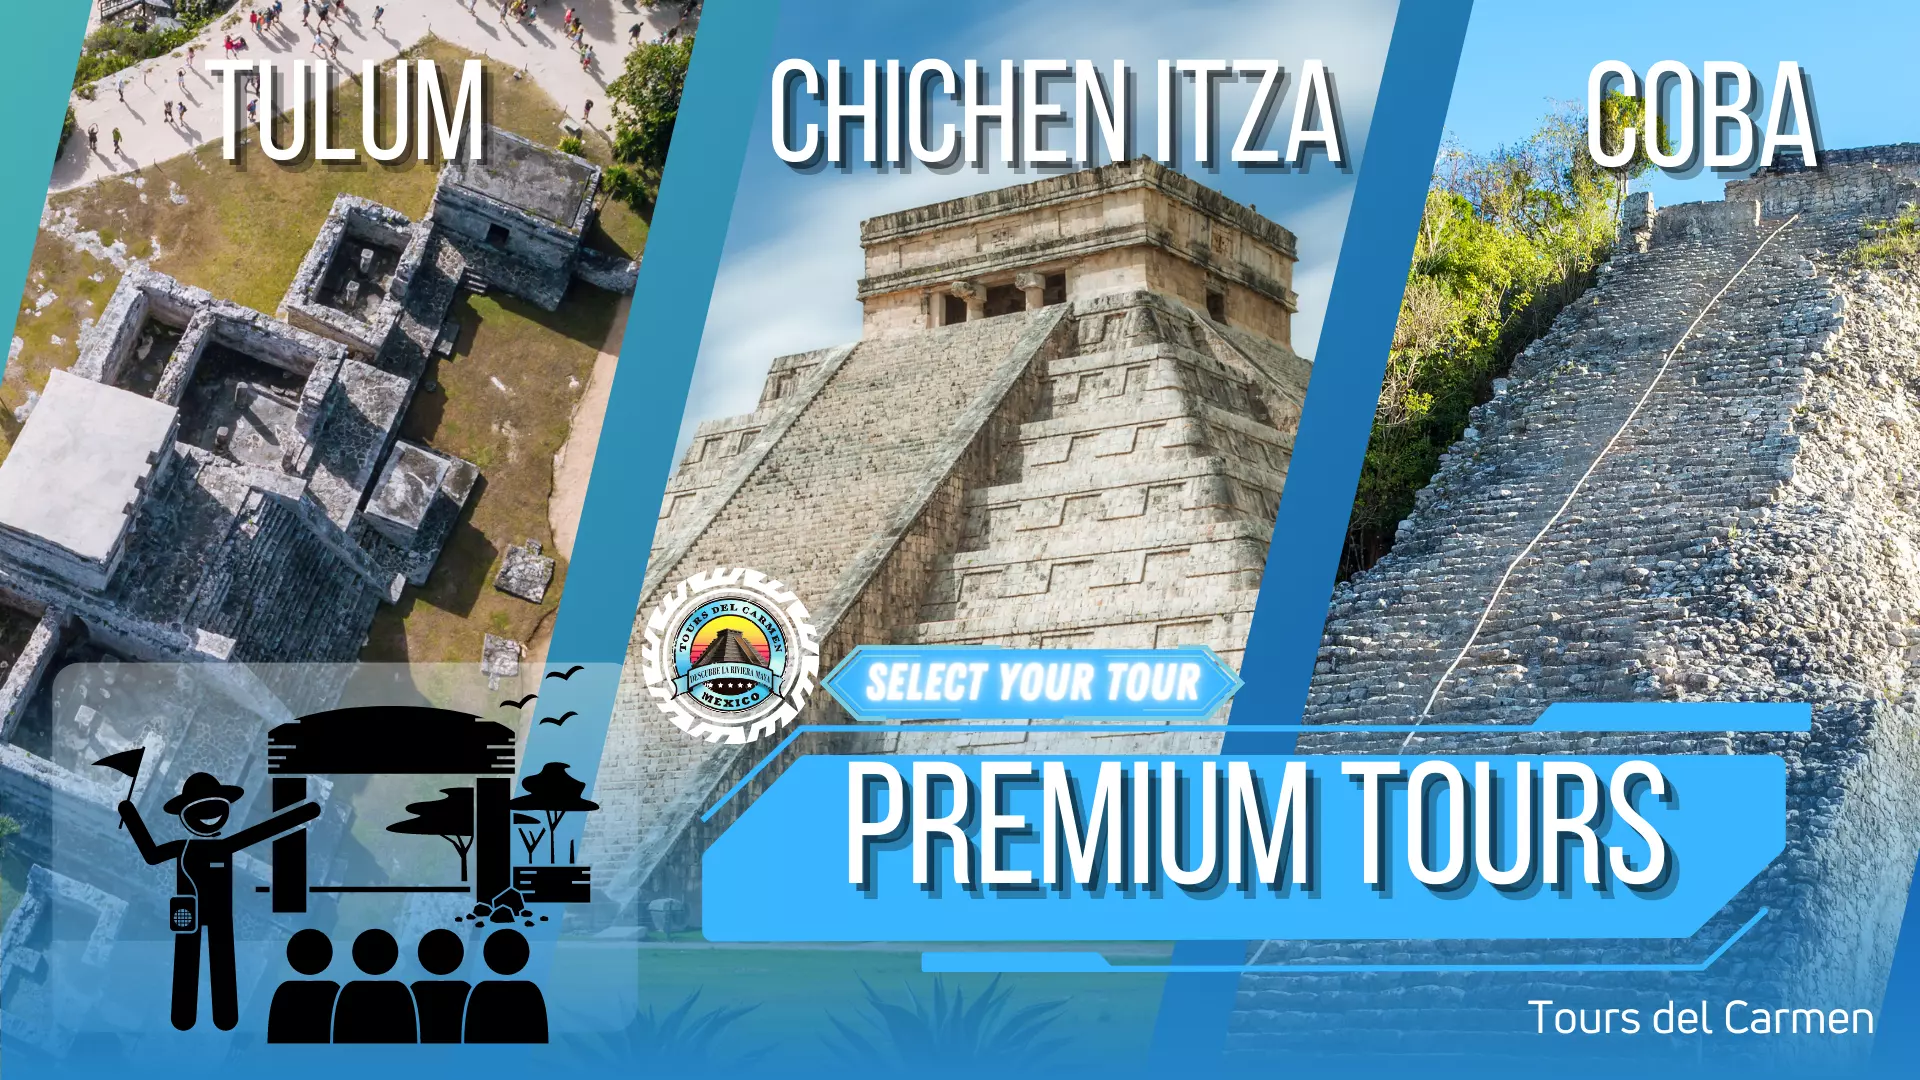 Premium Tours - Tours in Playa del Carmen | Tours del Carmen